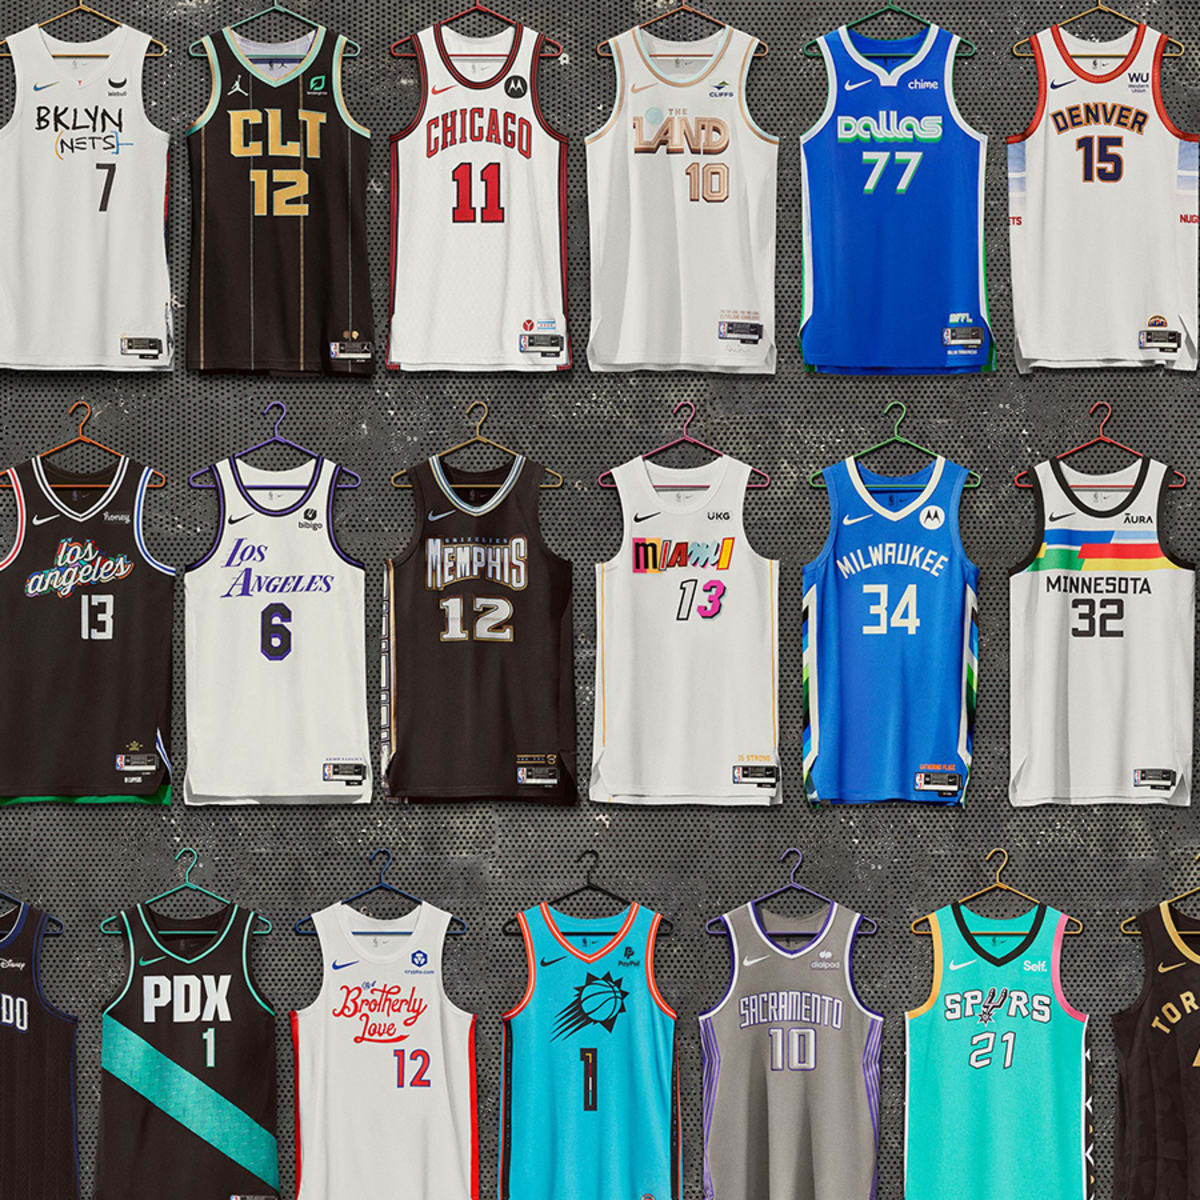 Ranking the 2017-18 NBA 'City' uniforms